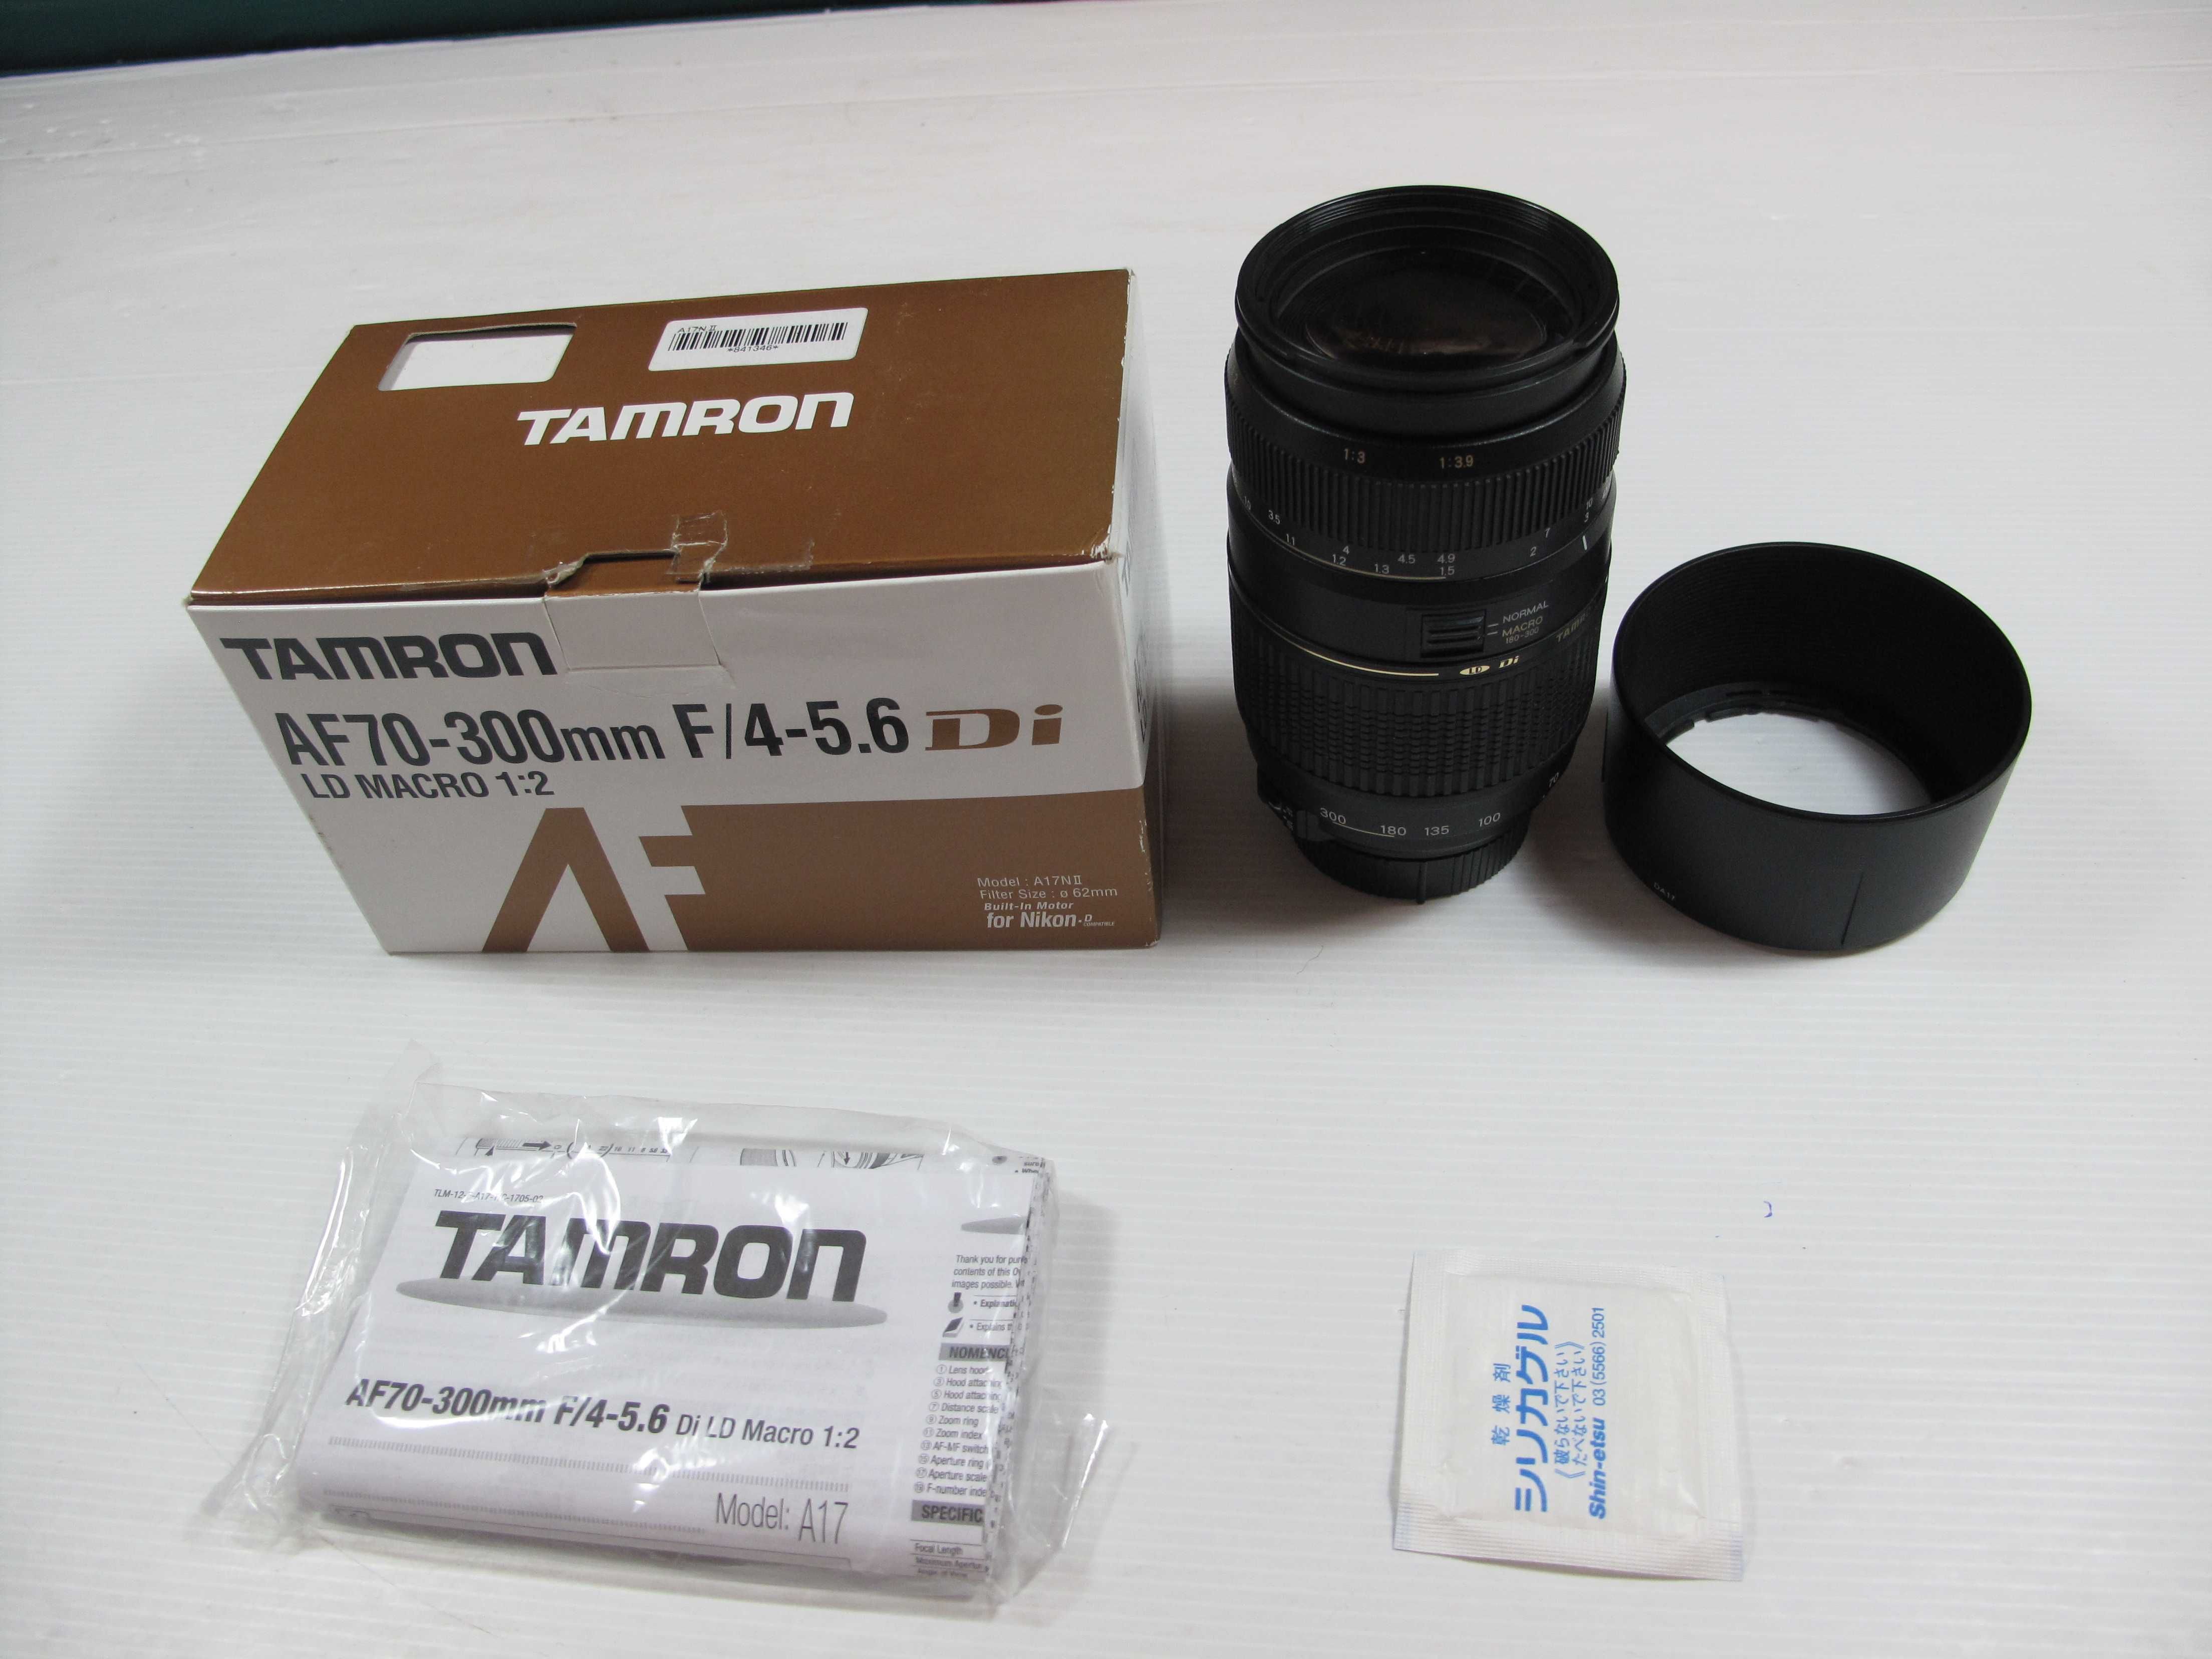 Nikon / Tamron 70-300 Macro -Fullframe- na caixa todas as Nikon